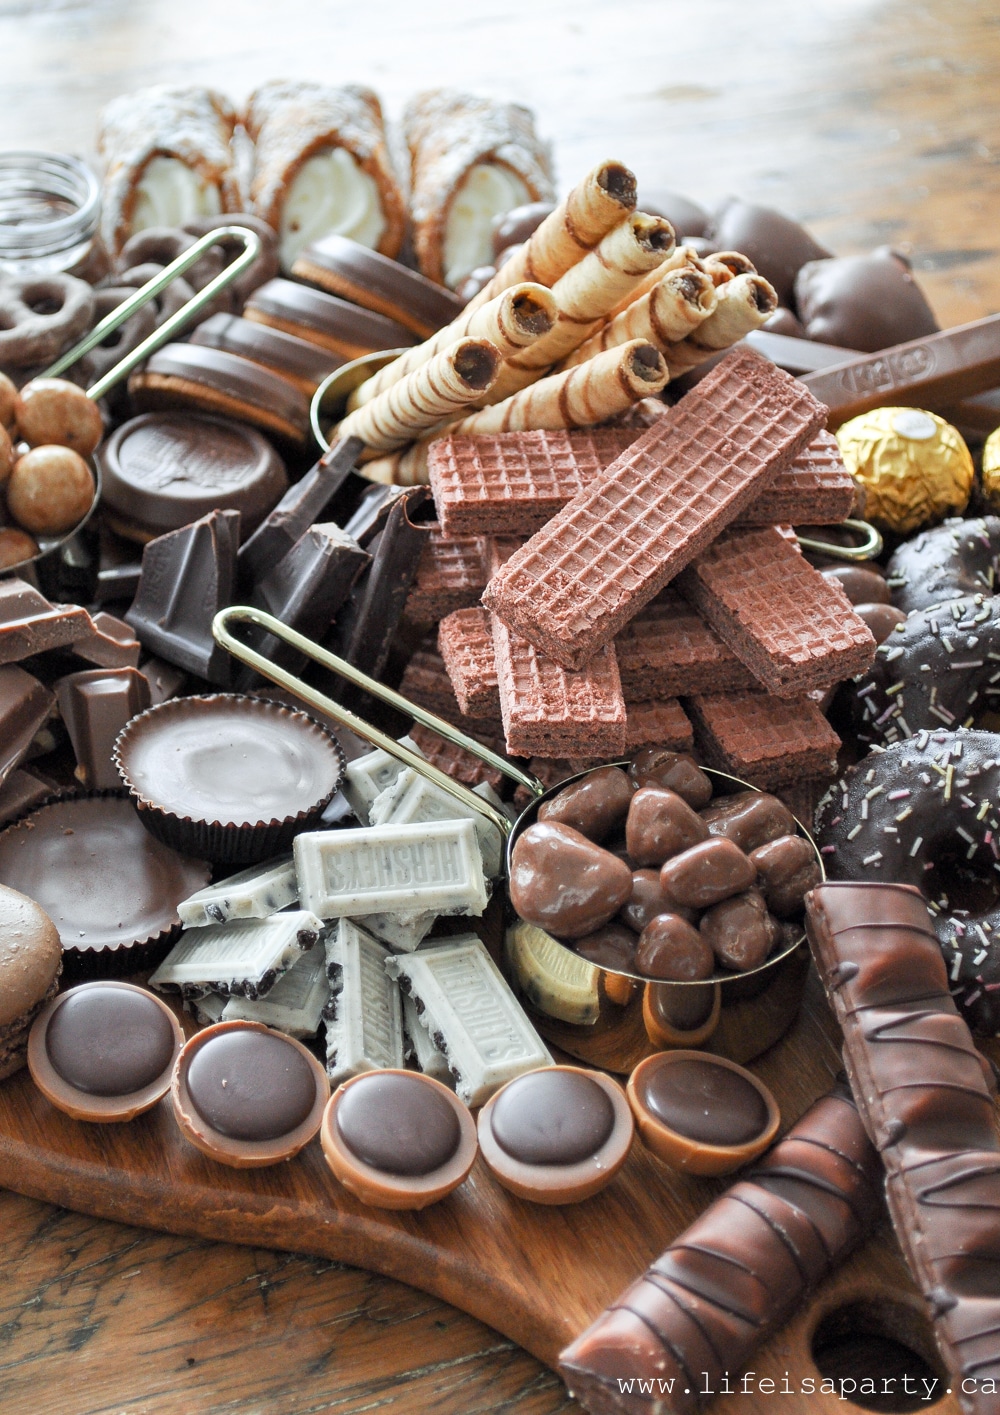 Chocolate dessert Board: